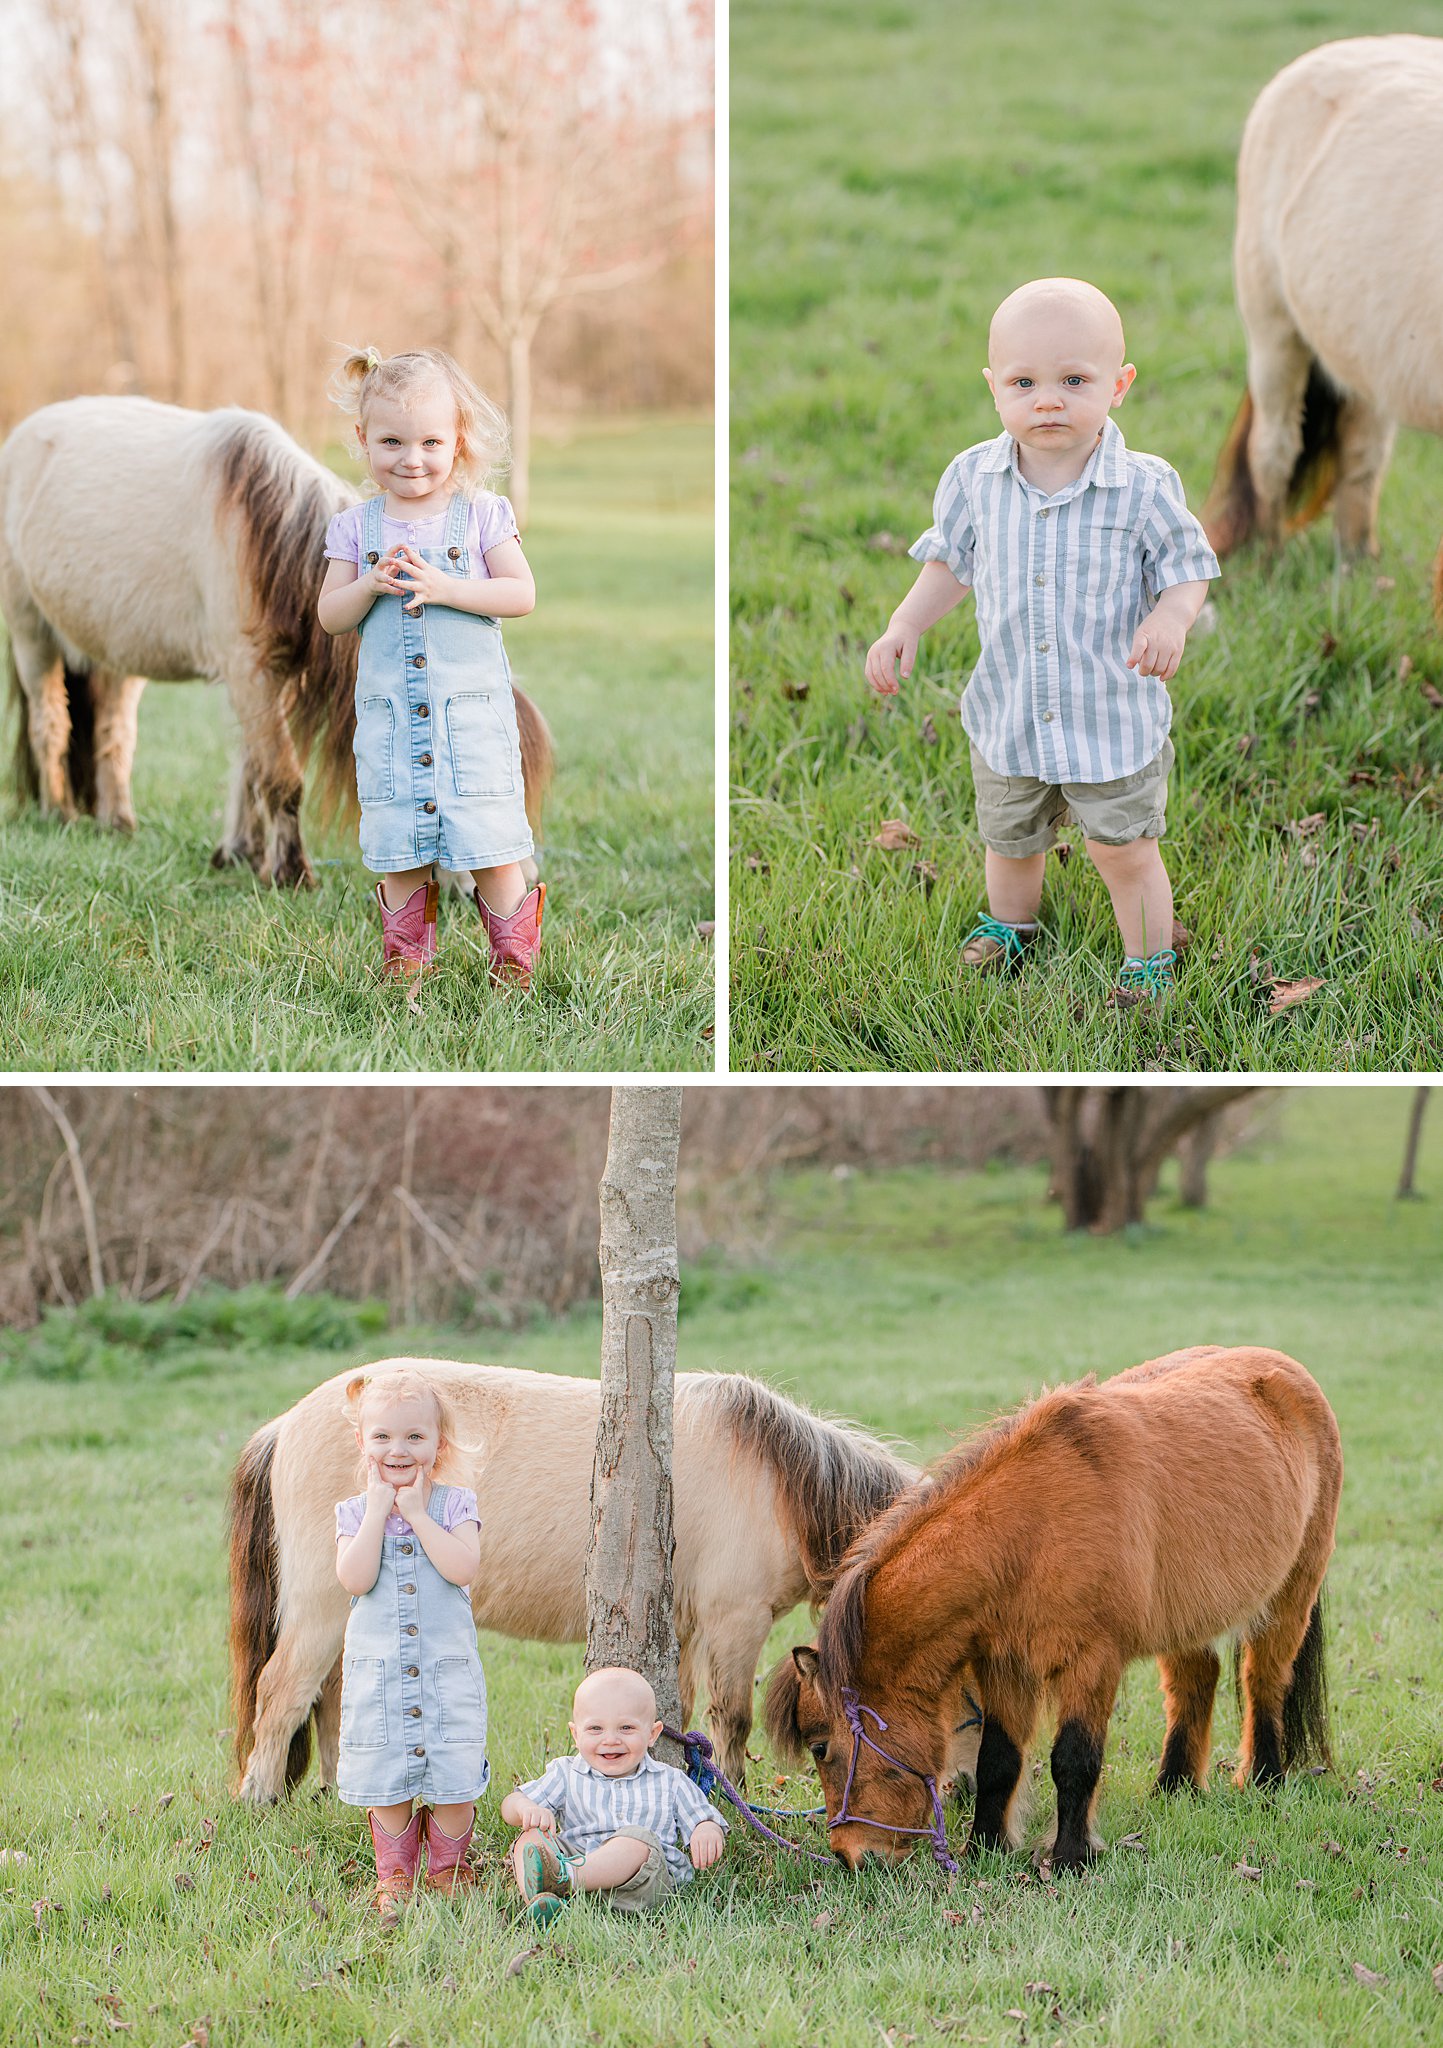 Urbana Ohio, Mechanicsburg Ohio, Family Photographer, Mini Ponies, Overalls Kids farm animals, Spring Family Photos, Ohio Family Photographer